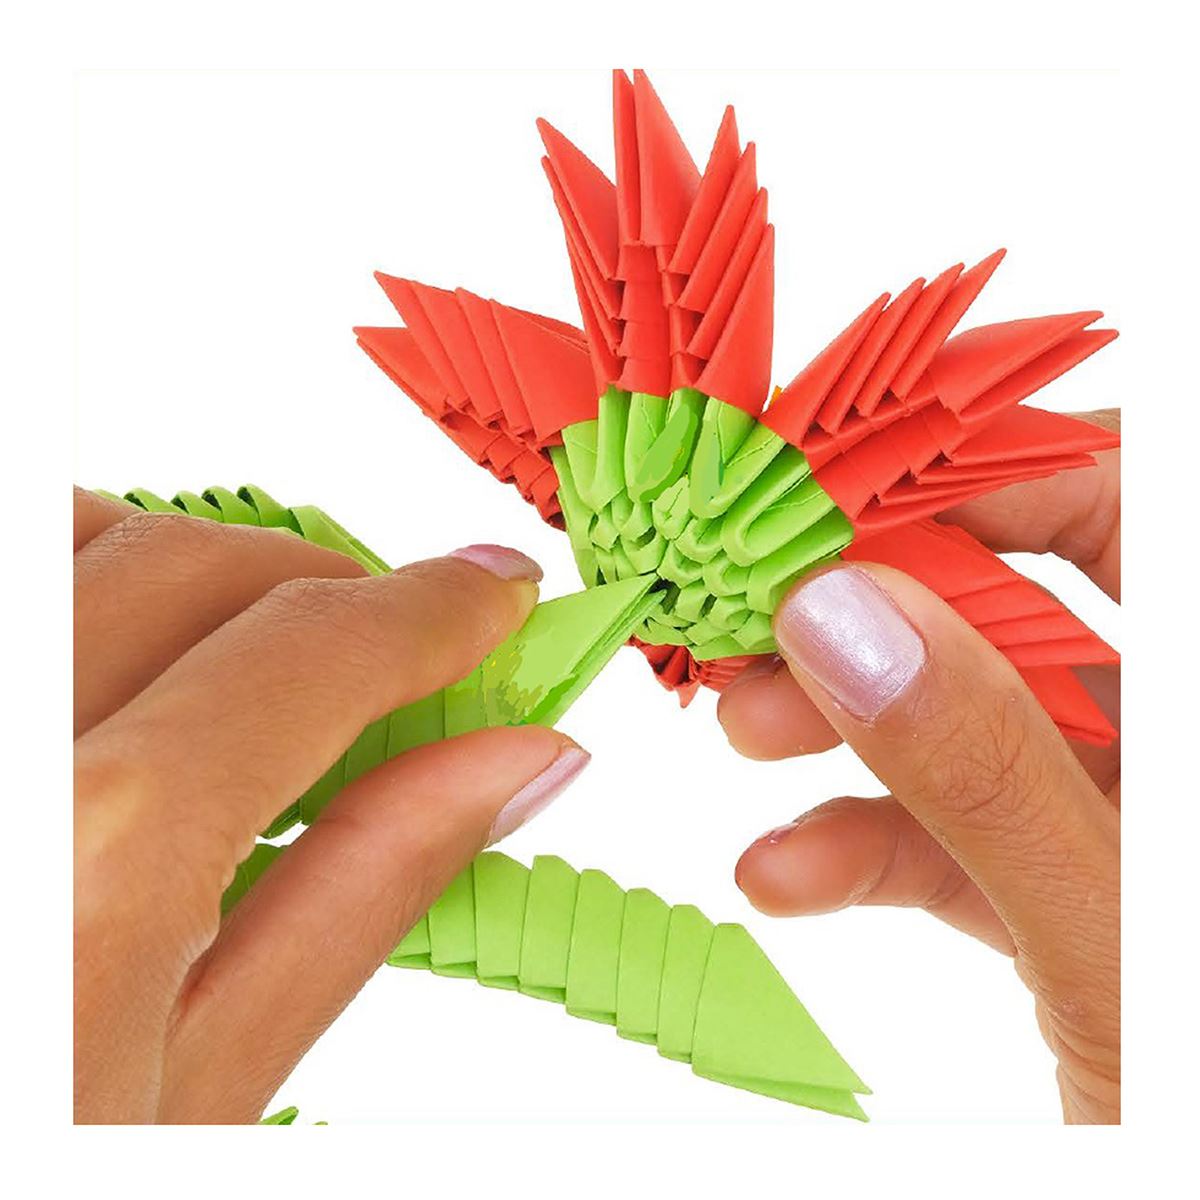 Origami 3D Maceta